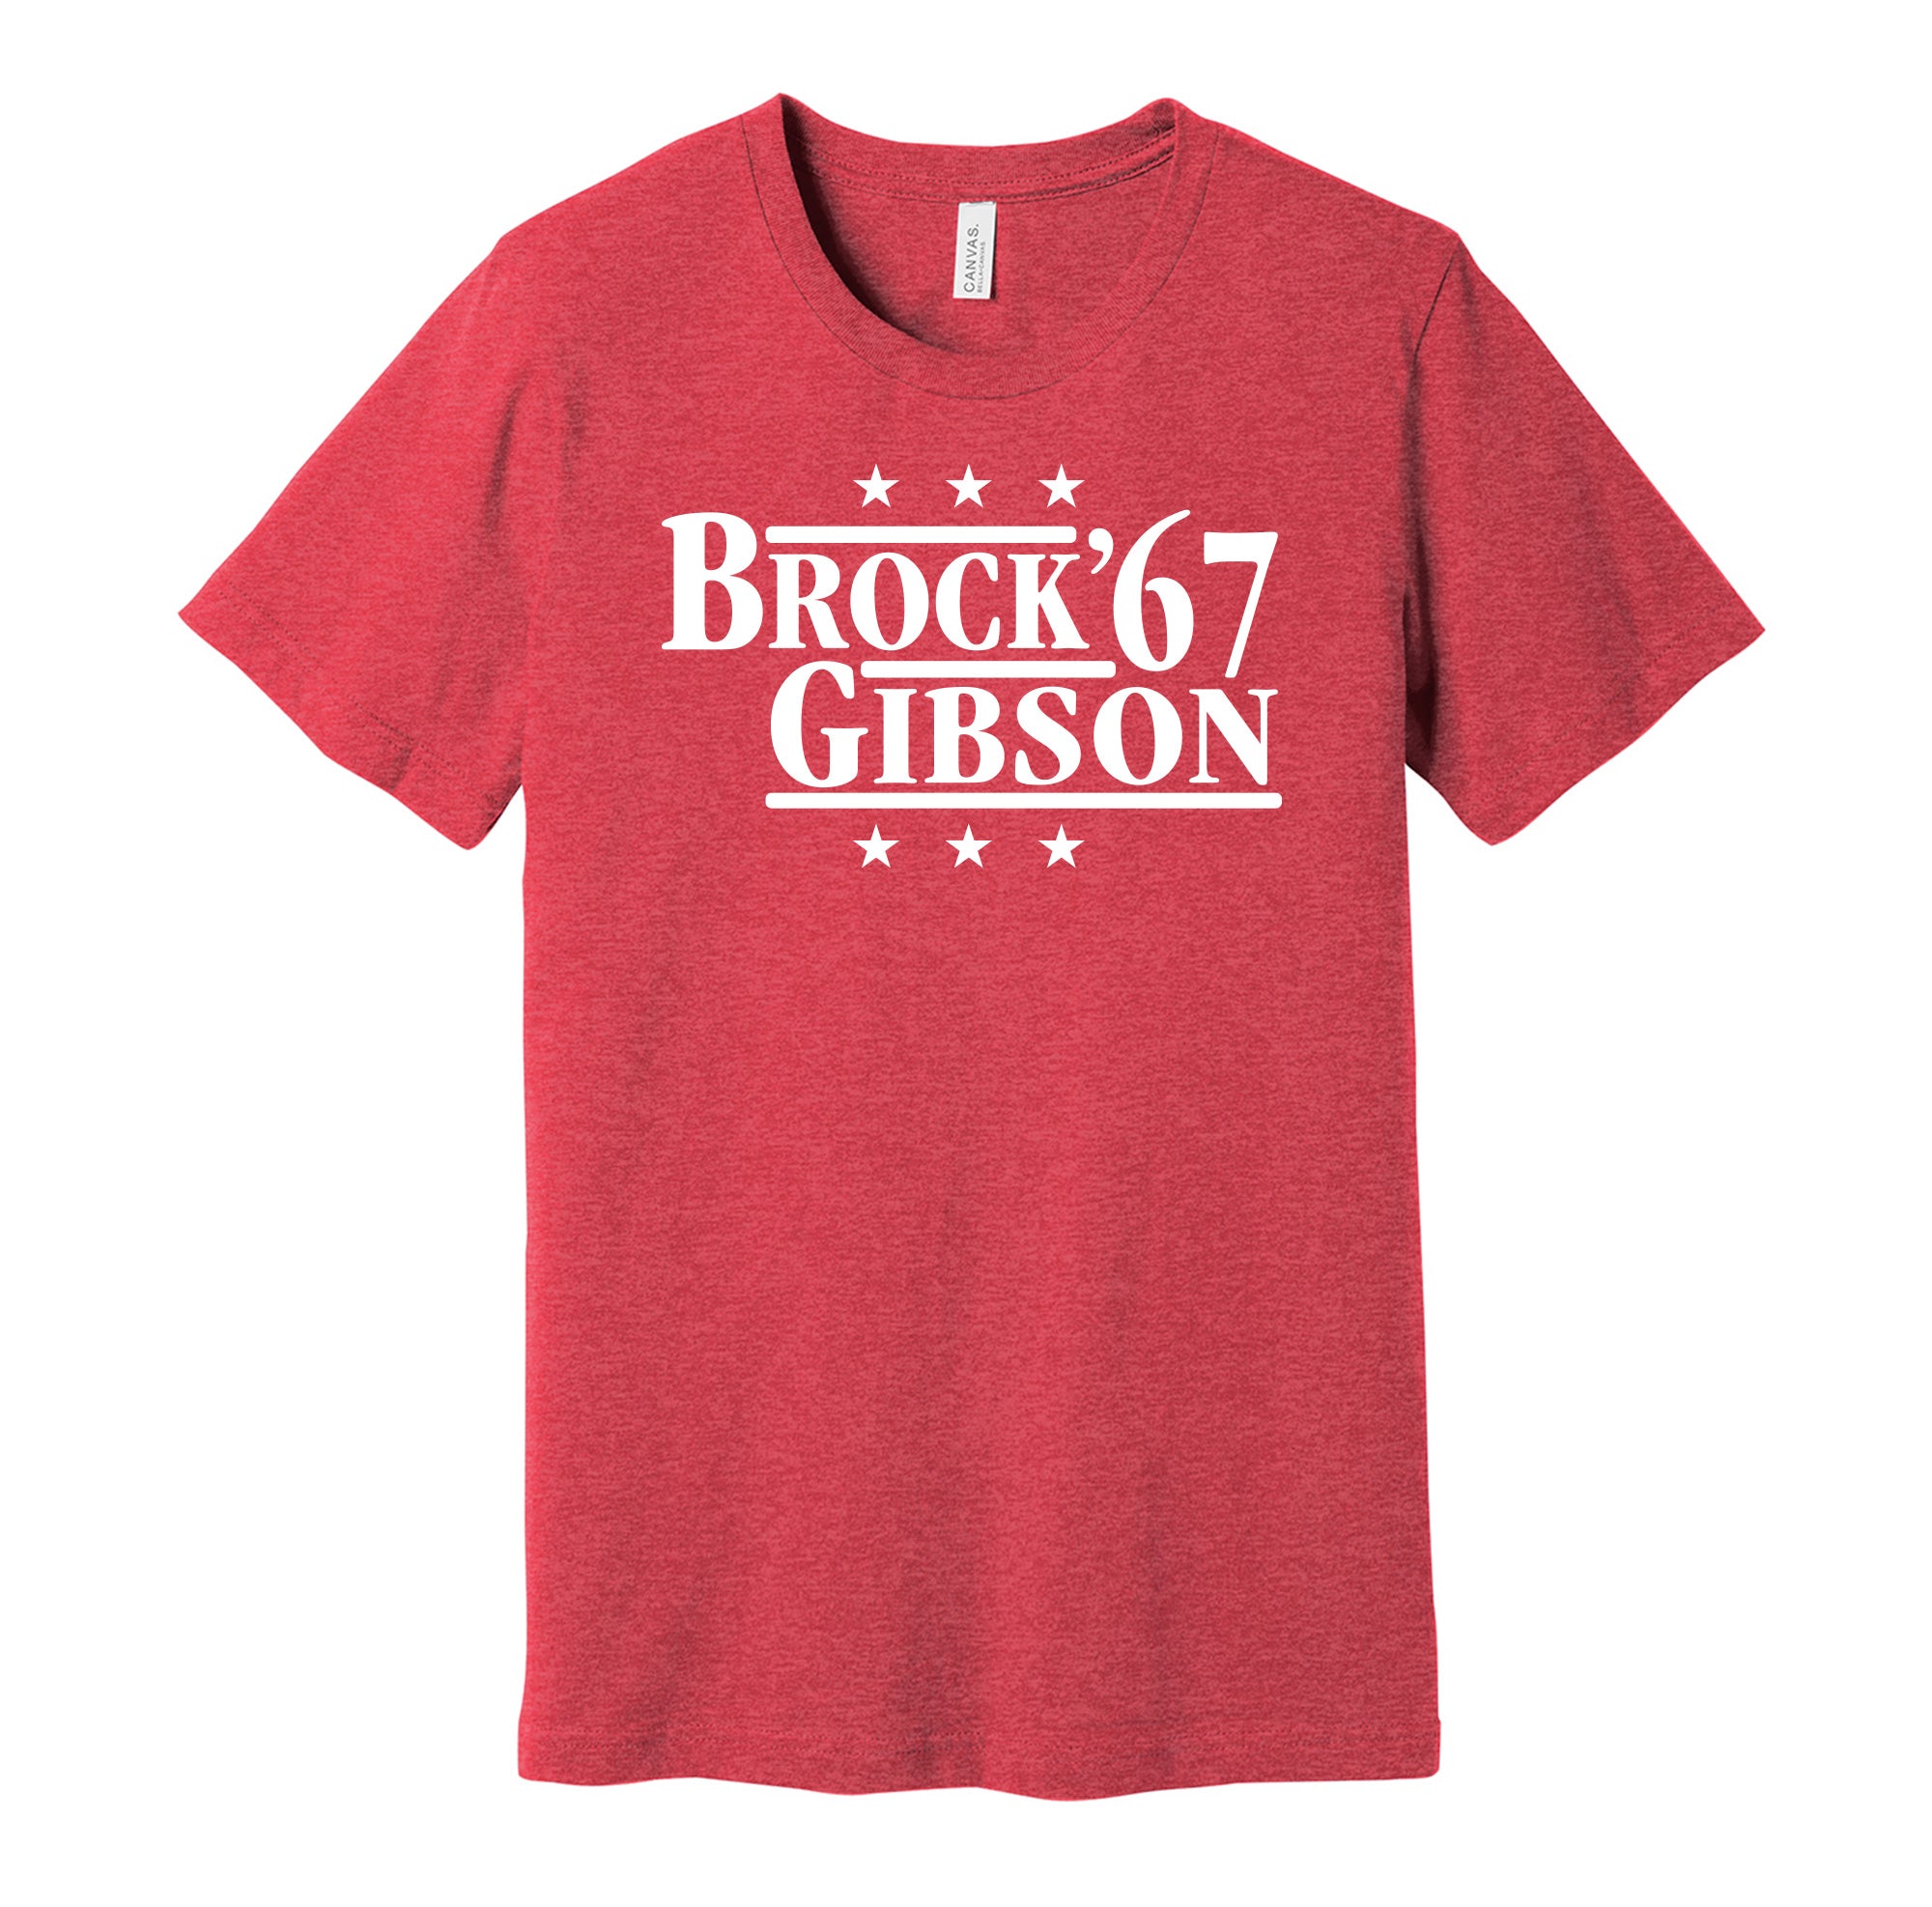 Brock & Gibson '67 - St. Louis Missouri Legends Political Campaign Parody T-Shirt - Hyper Than Hype Shirts S / Red Shirt